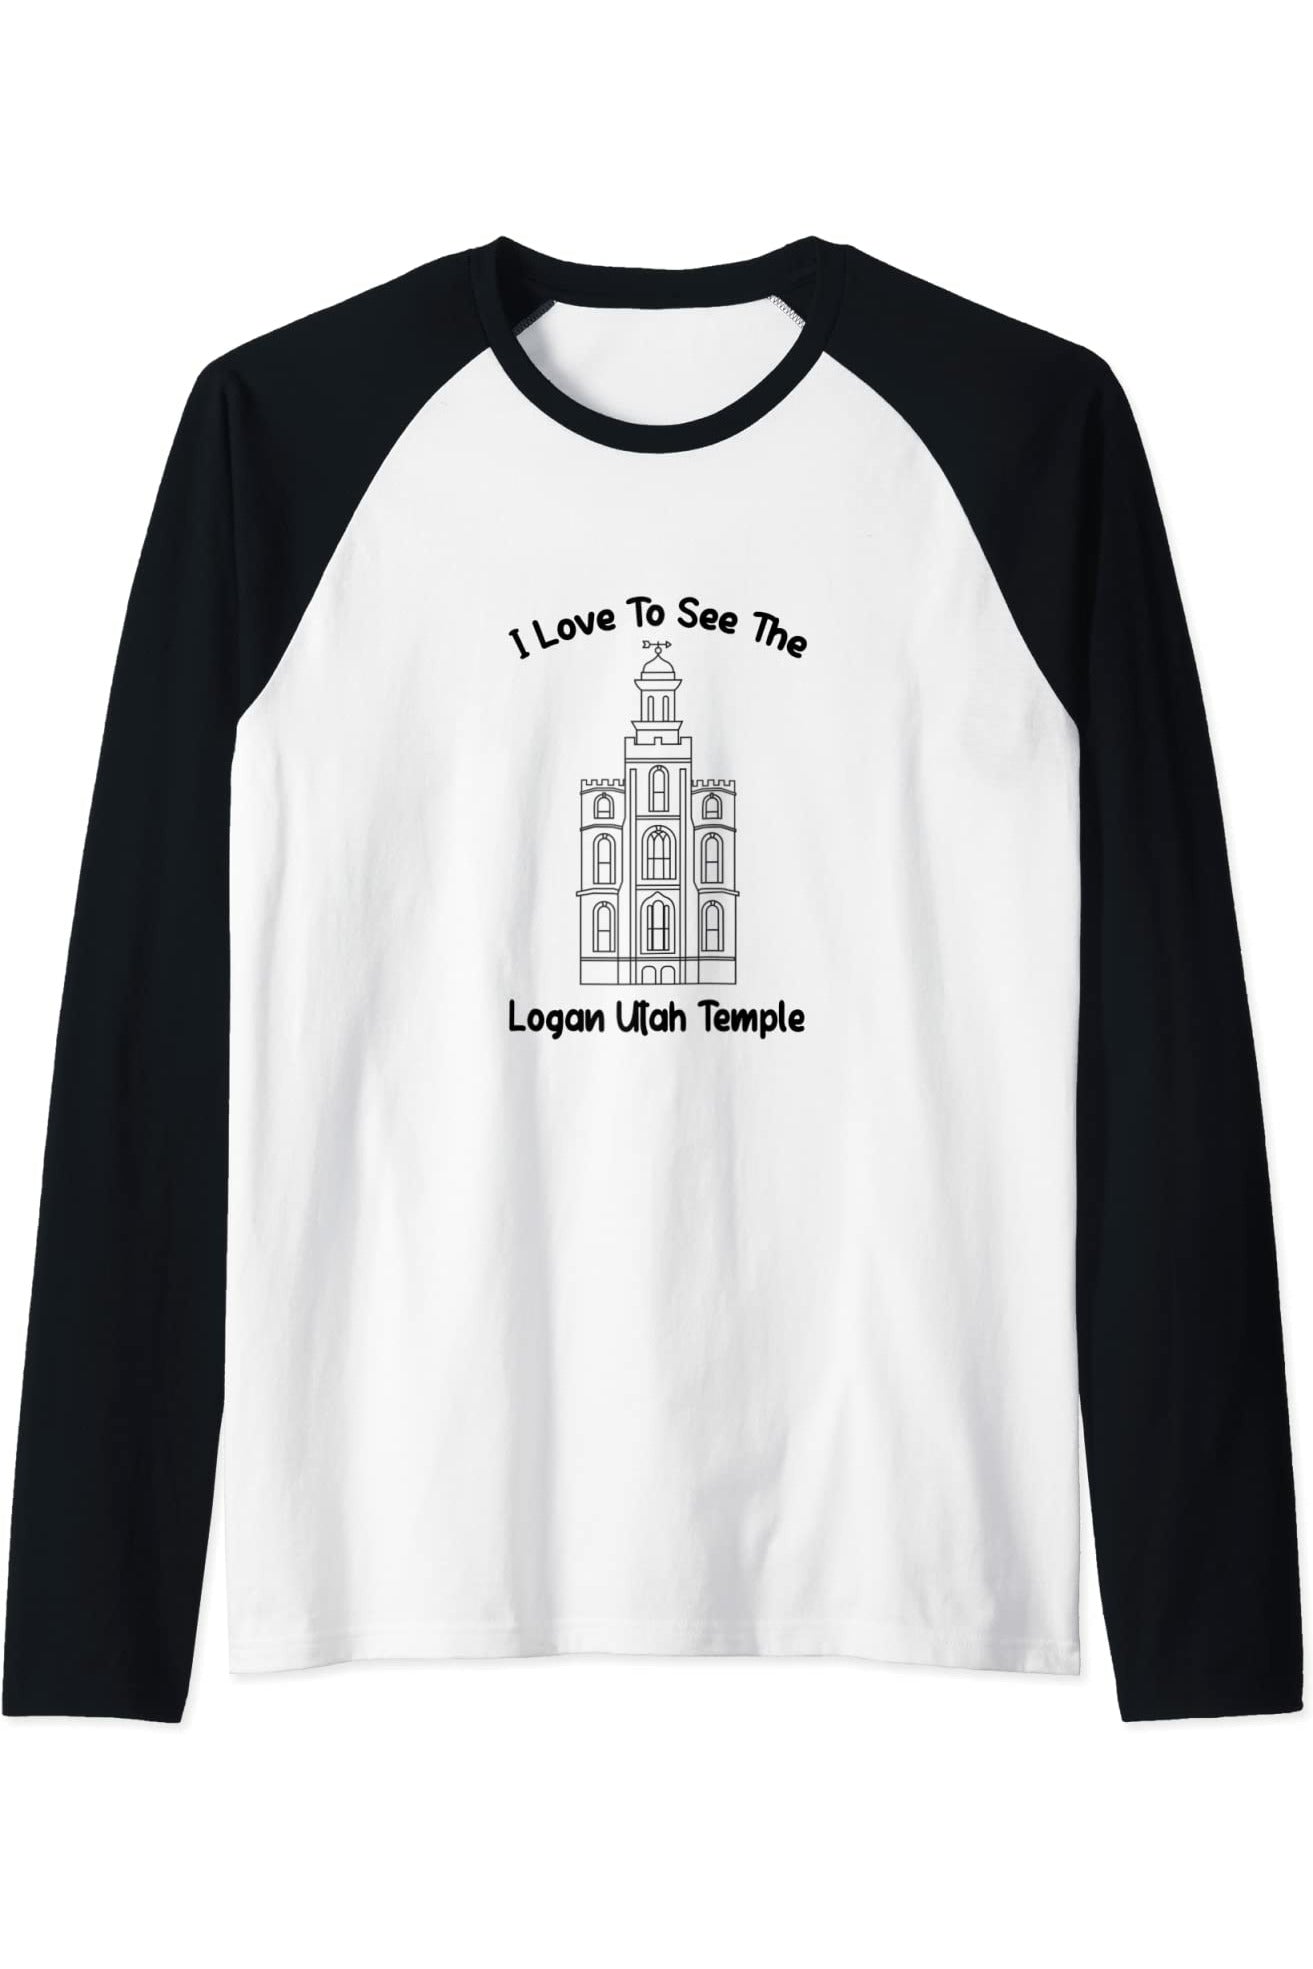 Logan Utah Temple Raglan - Primary Style (English) US